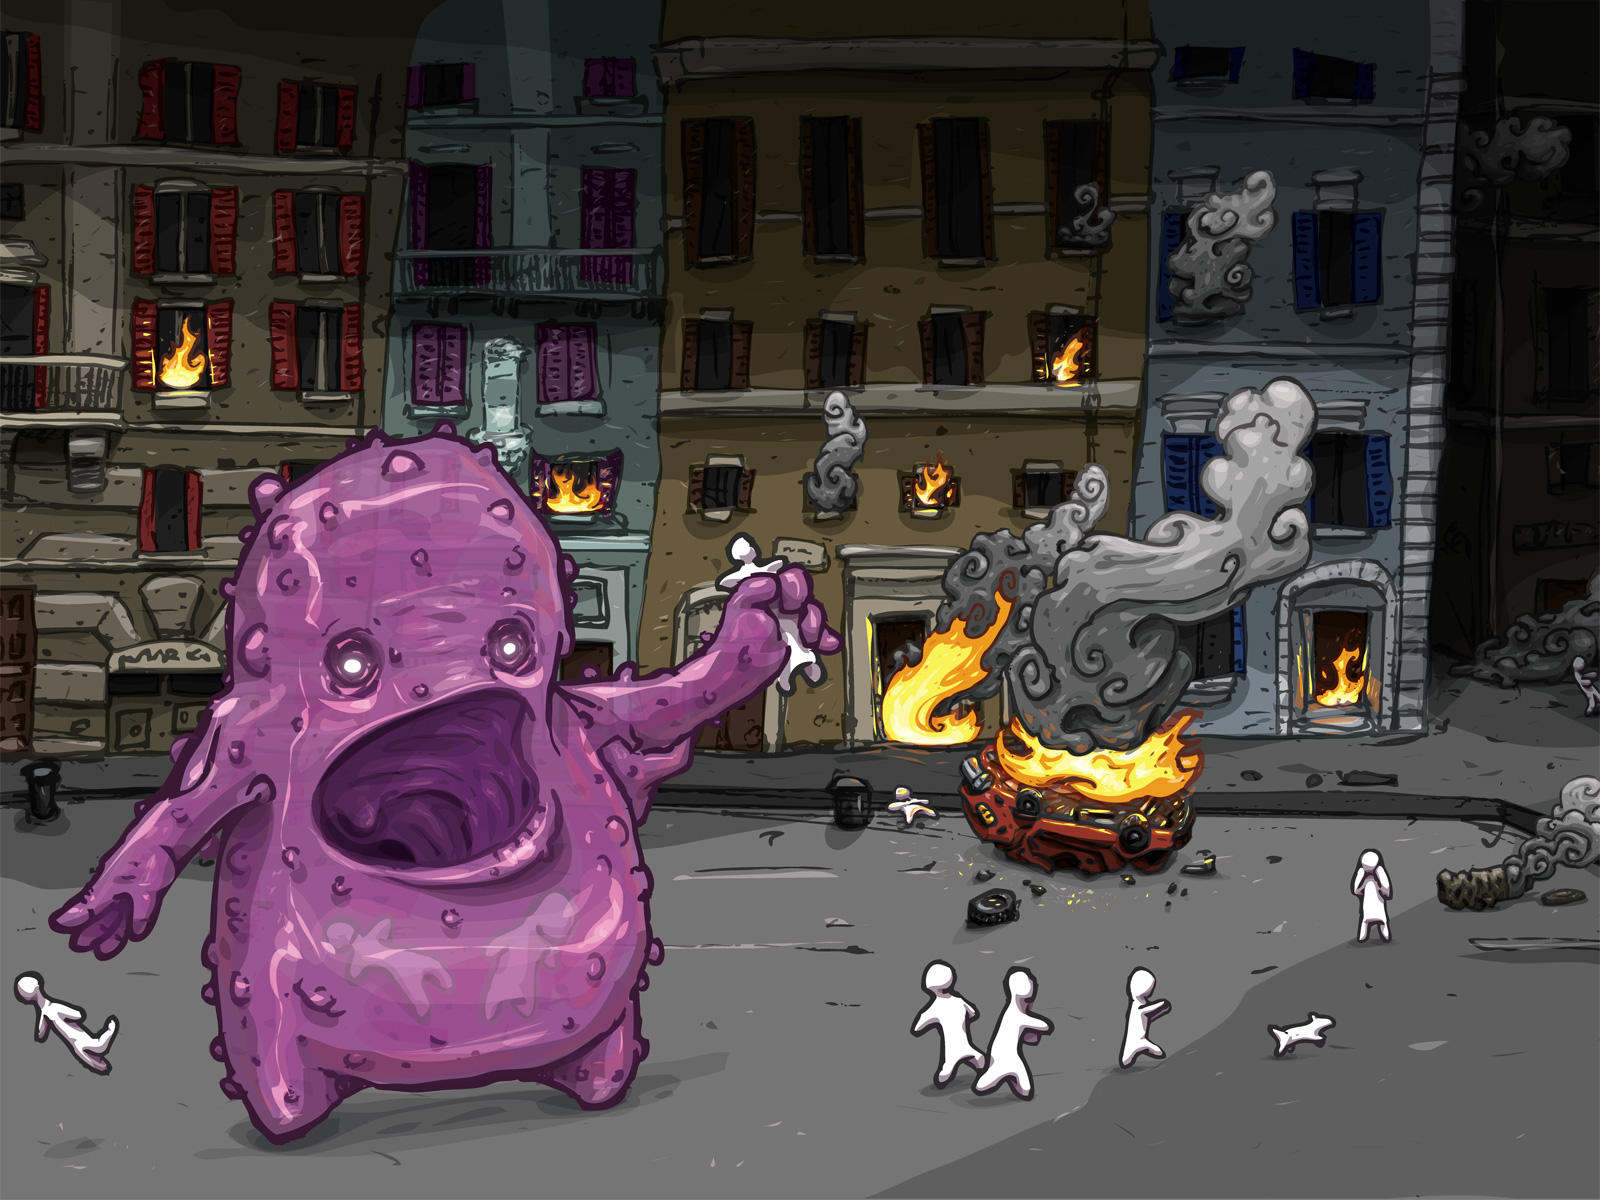 Cartoon monster in a colorful and playful HD desktop wallpaper by David Lanham